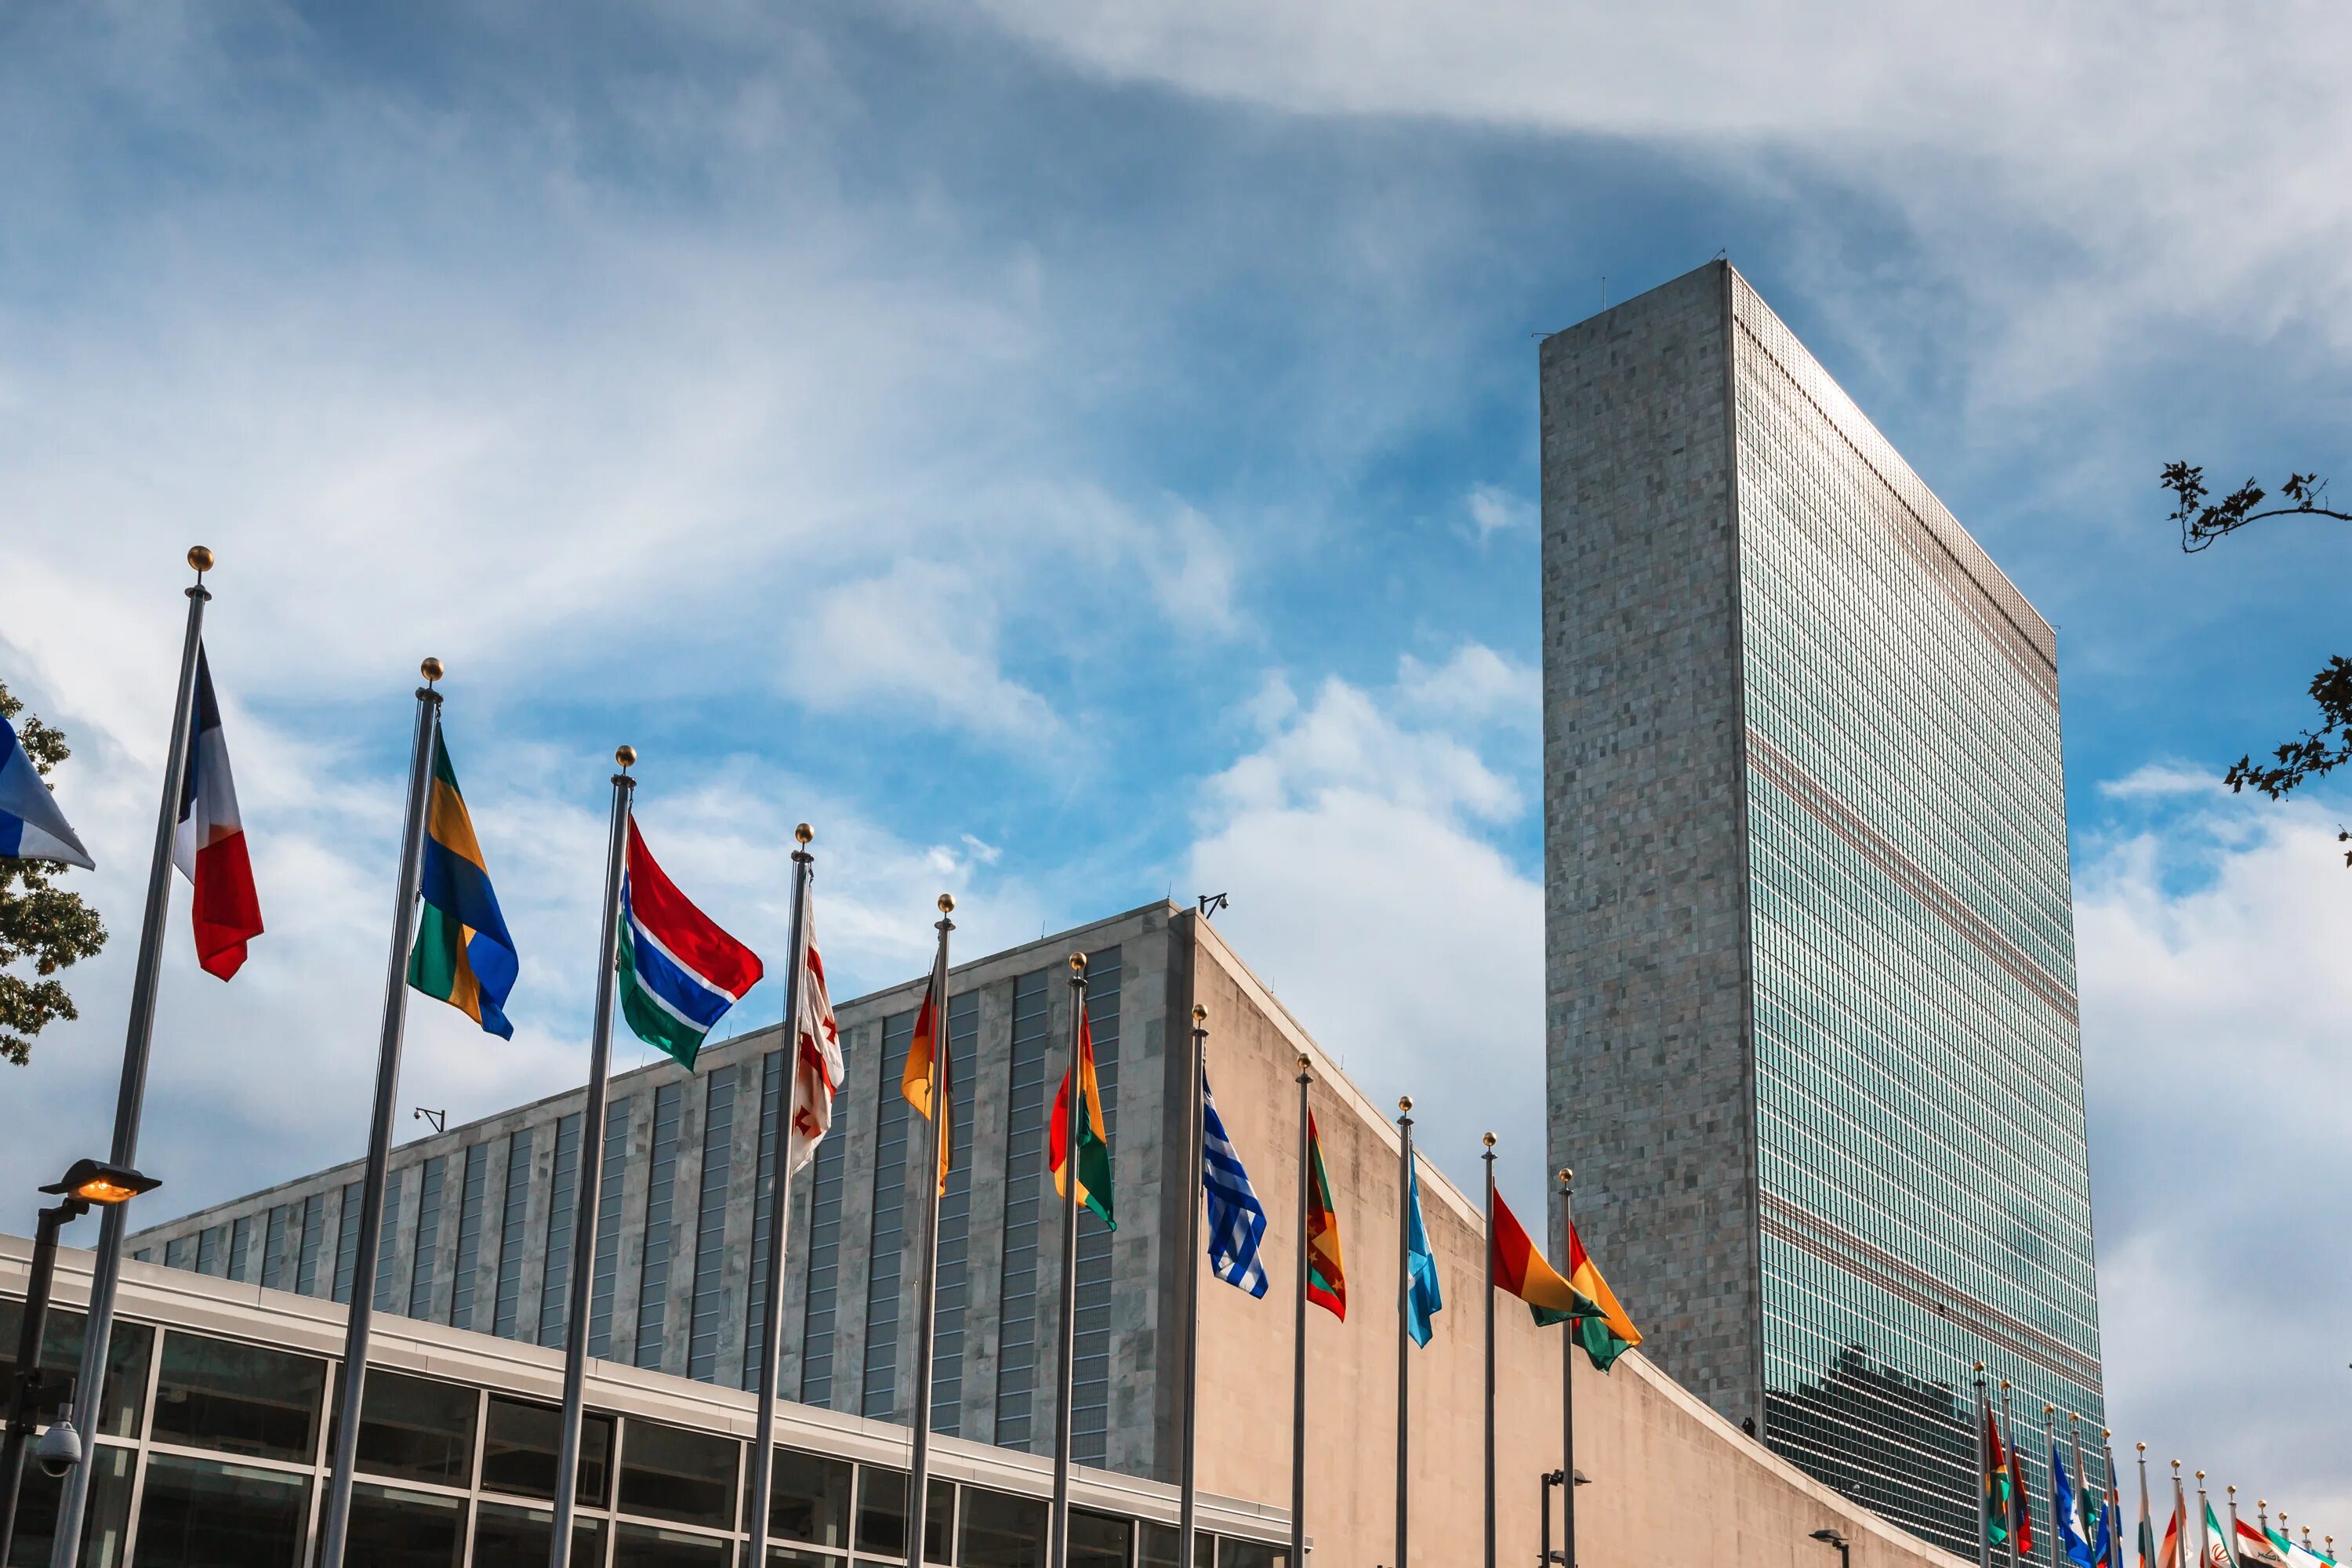 Организации оон в сша. Штаб-квартира ООН В Нью-Йорке. Здание ООН В Нью-Йорке. Здание ООН В Нью-Йорке флаги. Здание ООН В Нью-Йорке фото.